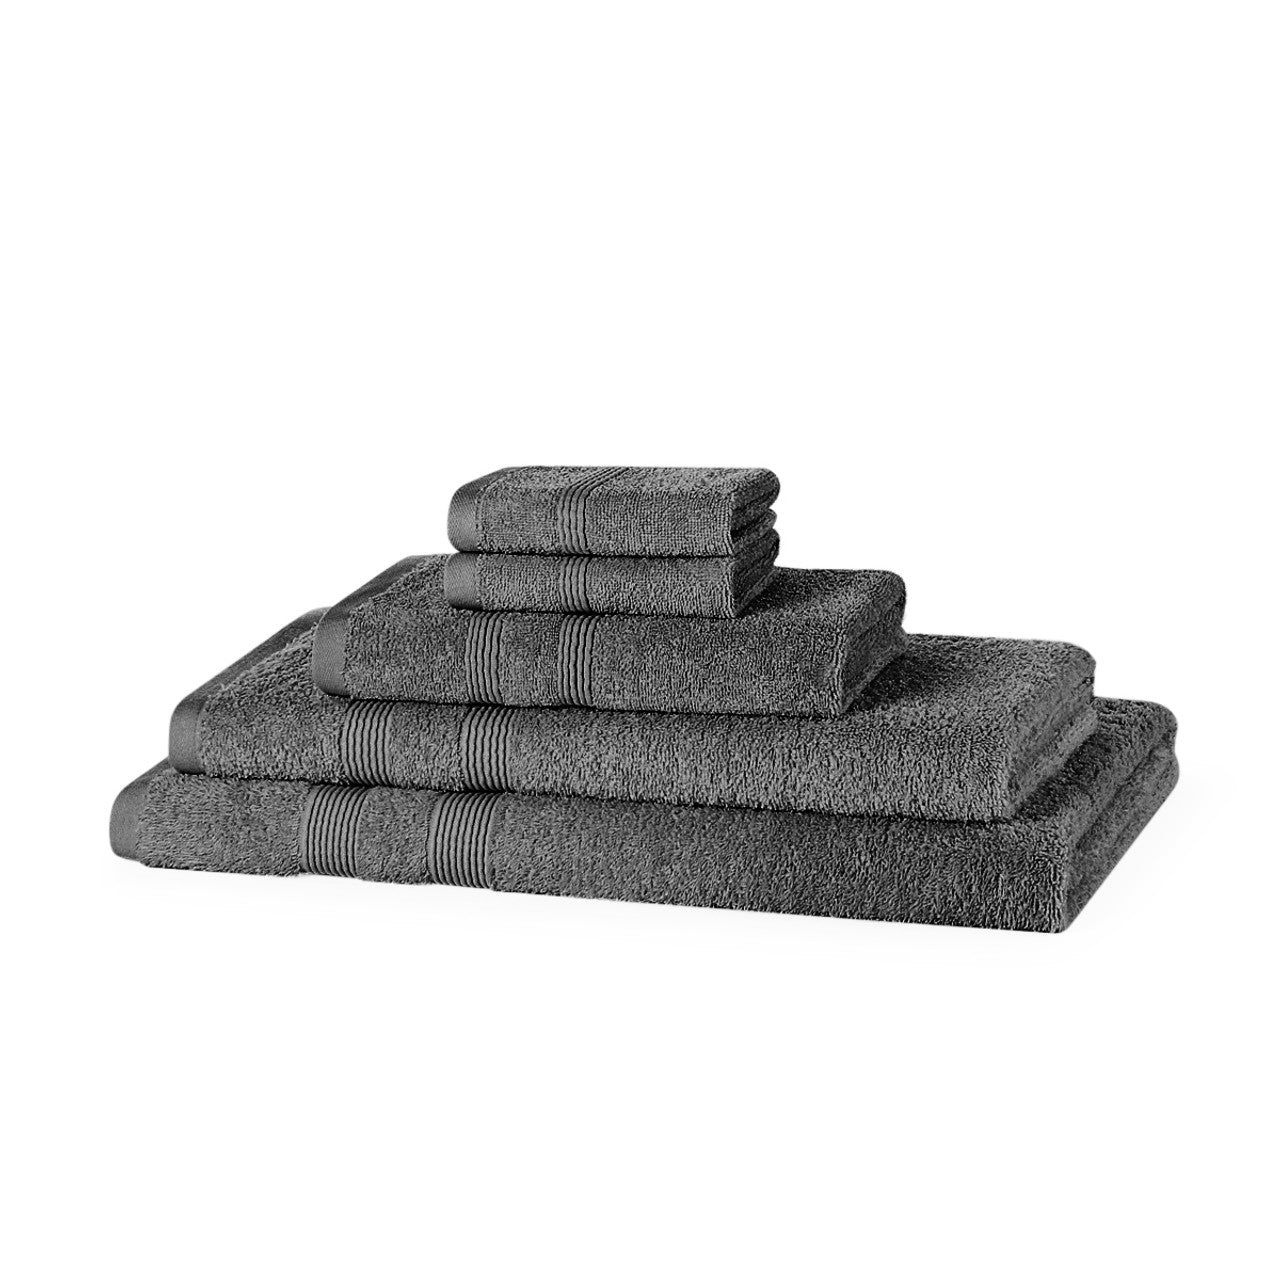 Egyptian Cotton 5 Piece Bale Set 500GSM - 2 Face Cloths, 1 Hand Towel, 1 Bath Towel, 1 Bath Sheet